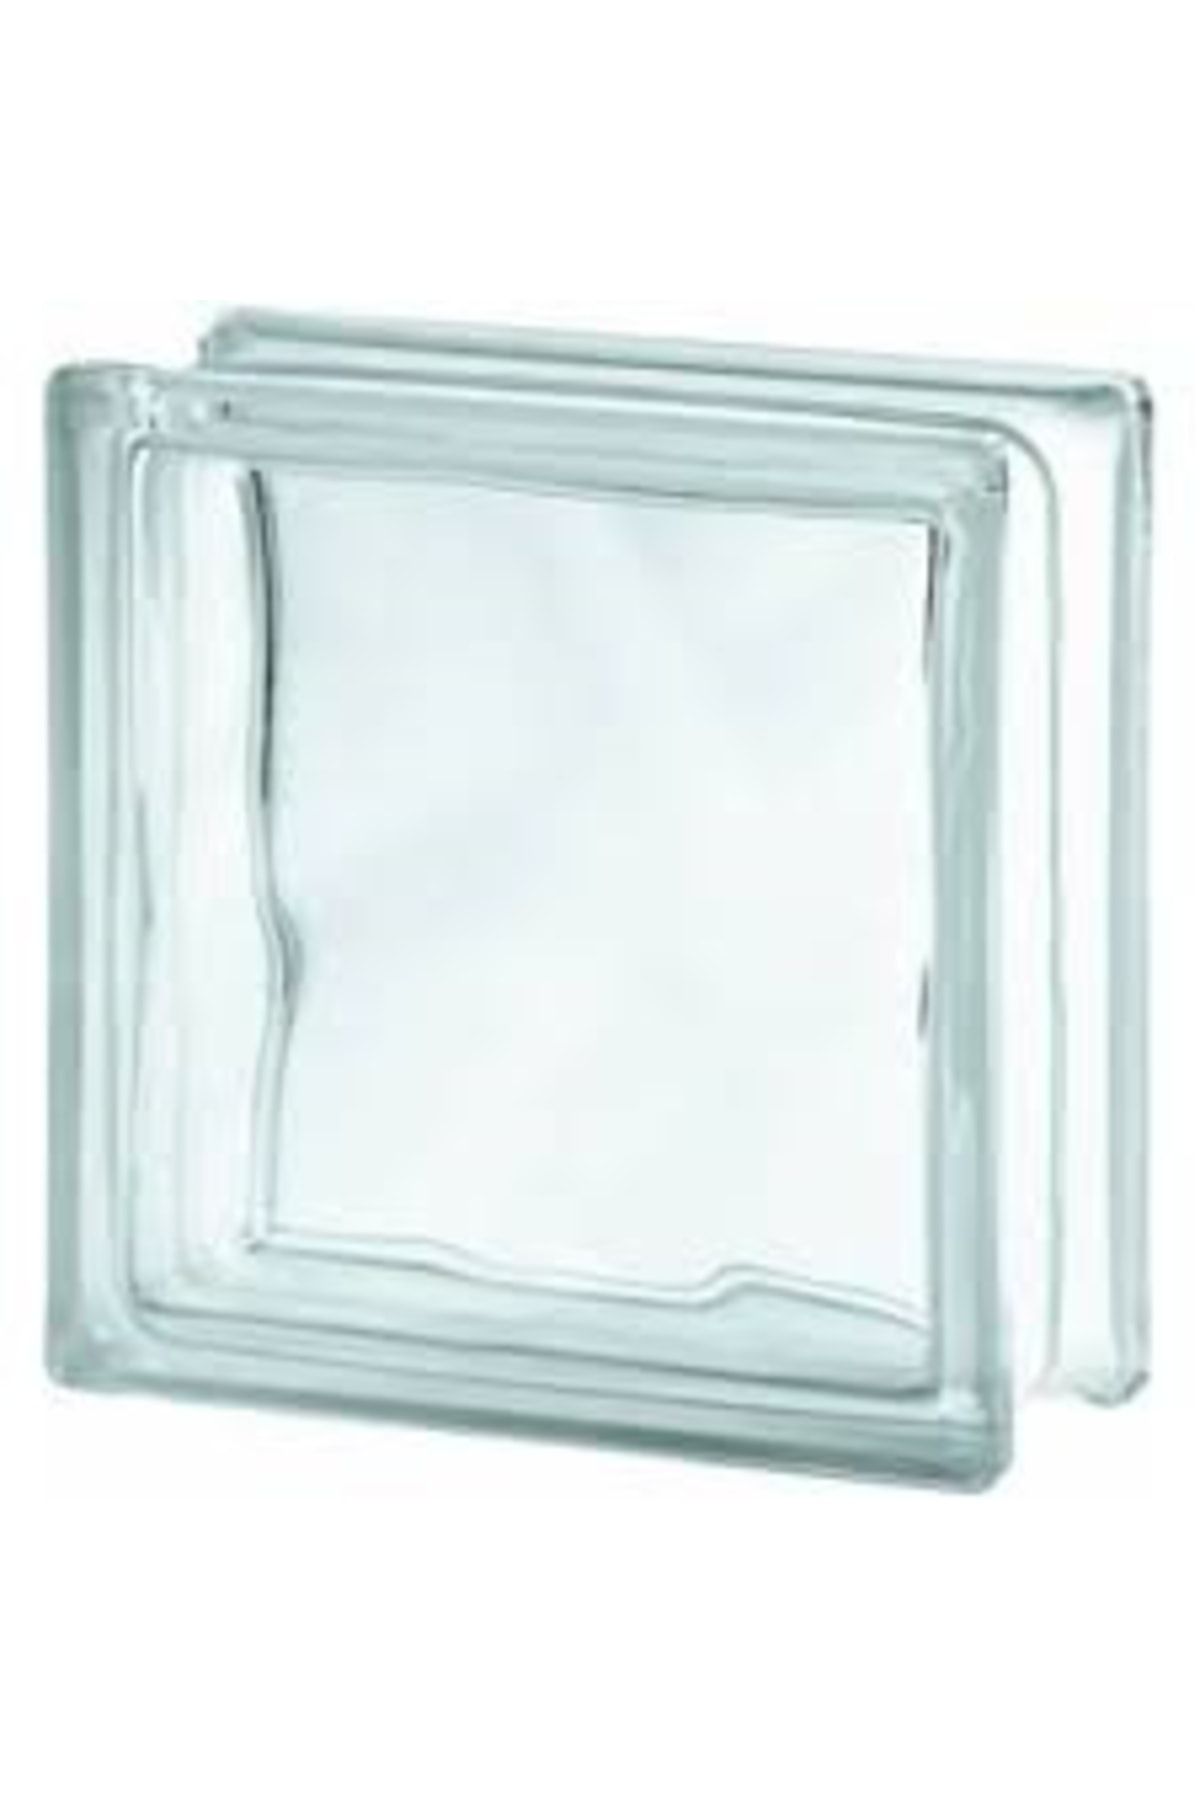 SEVES GLASS BLOCK Seves Cam Tuğla Şeffaf Dalga Model (10 Adet)